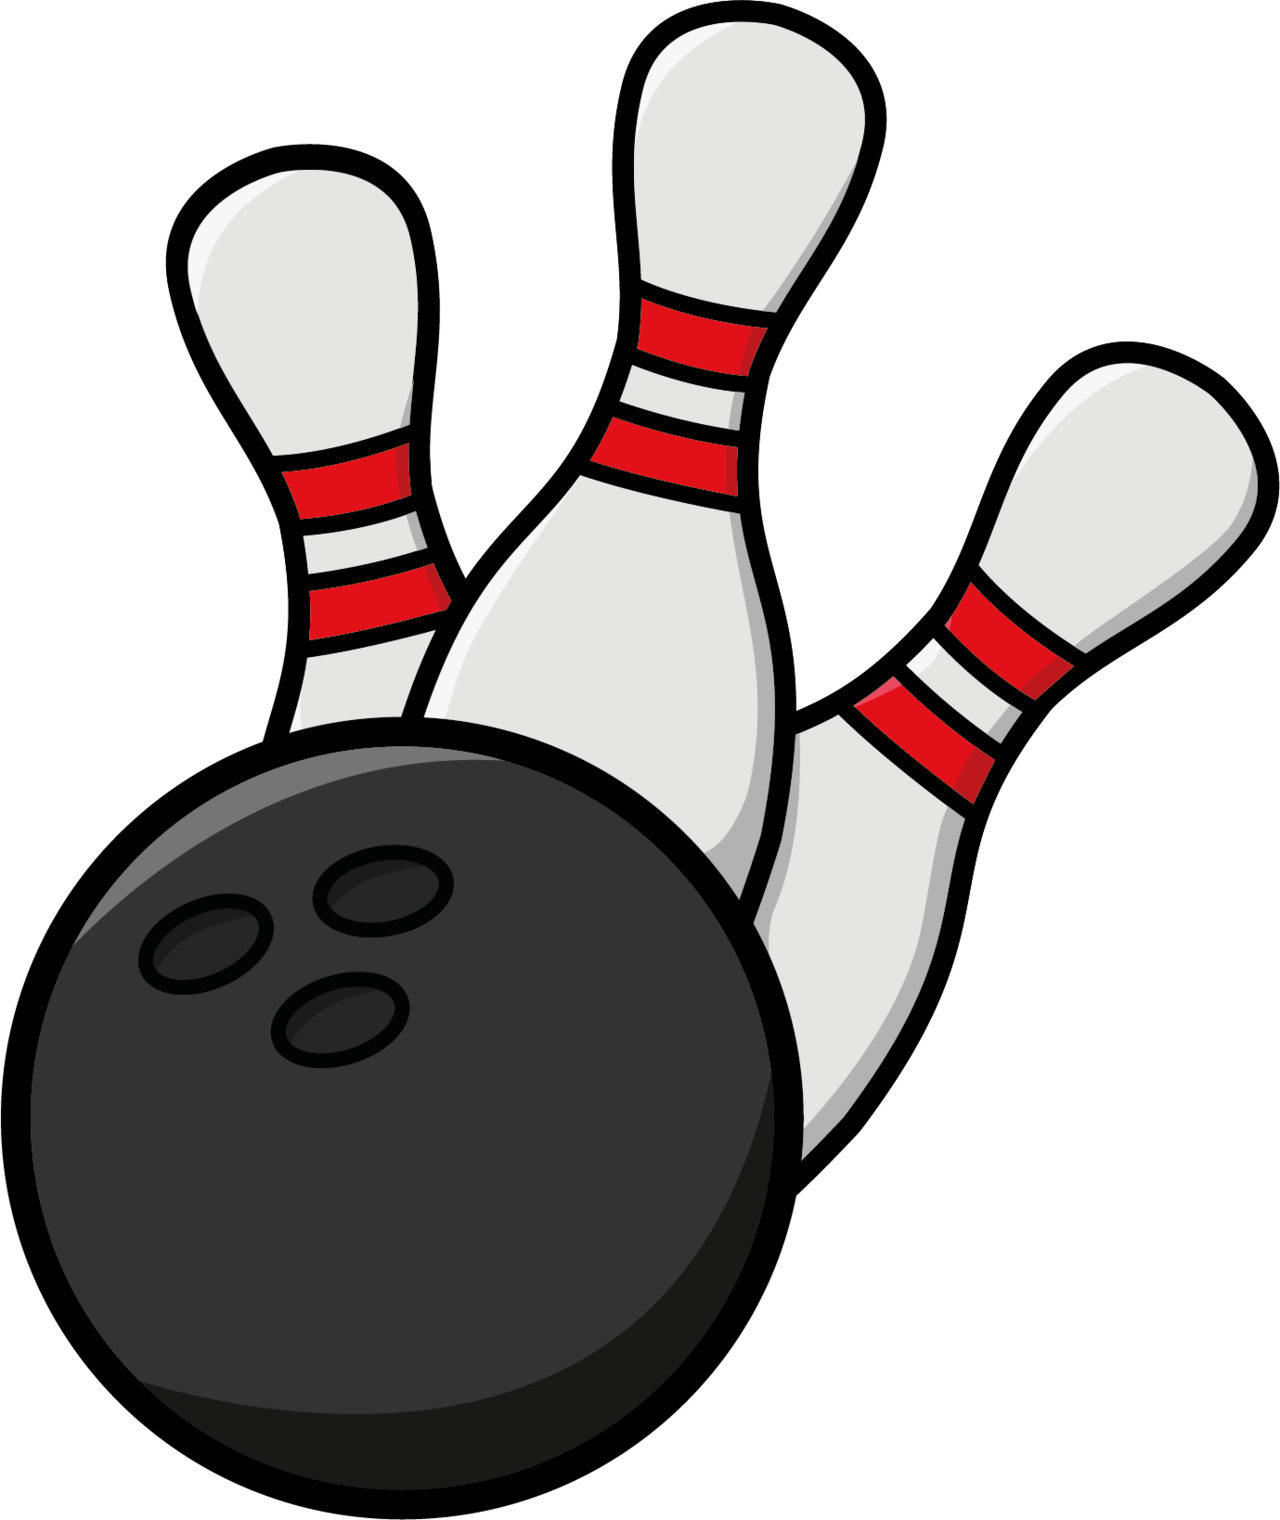 Free Cartoon Bowling Cliparts, Download Free Cartoon